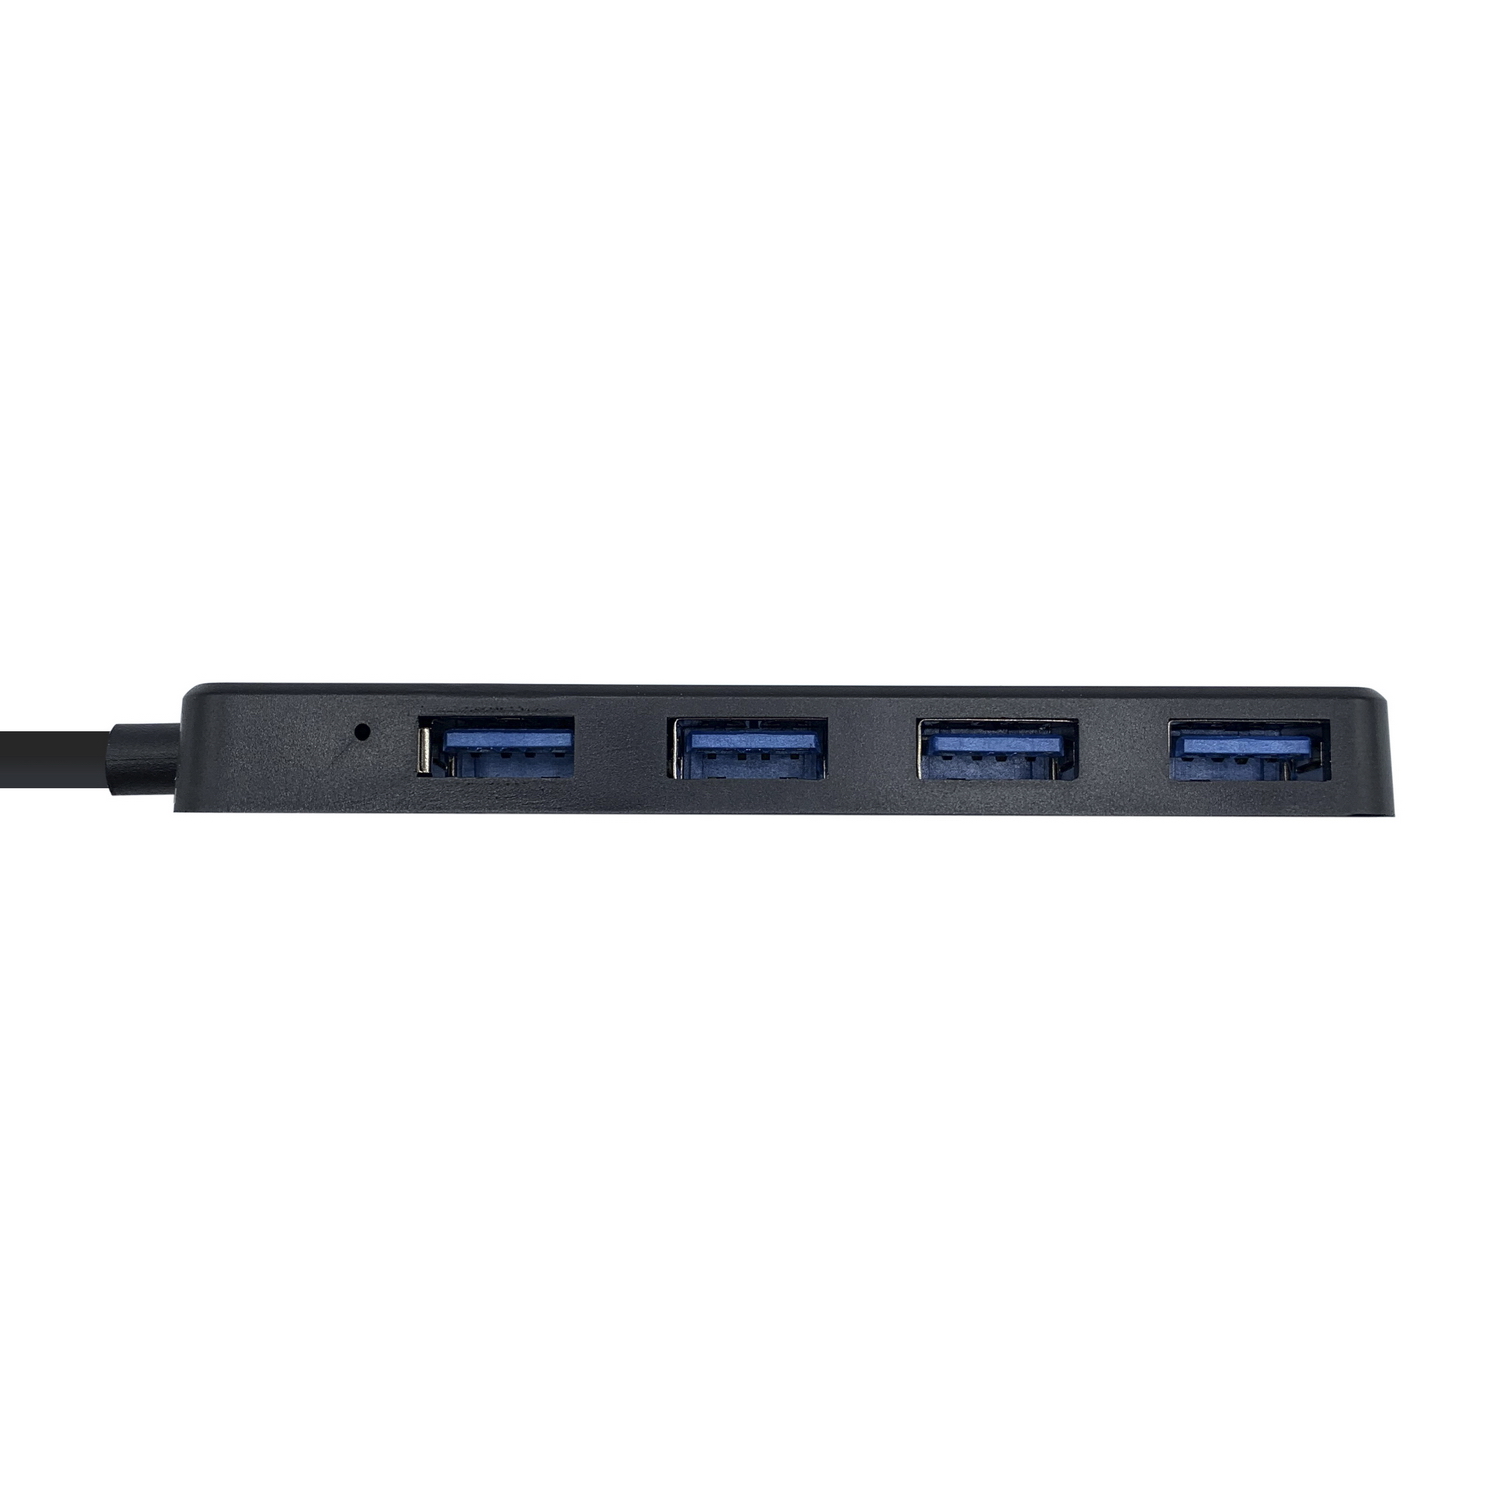 Aisens HUB USB 3.0 - Type A Mâle vers 4xType A Femelle - 30cm - Couleur Noir